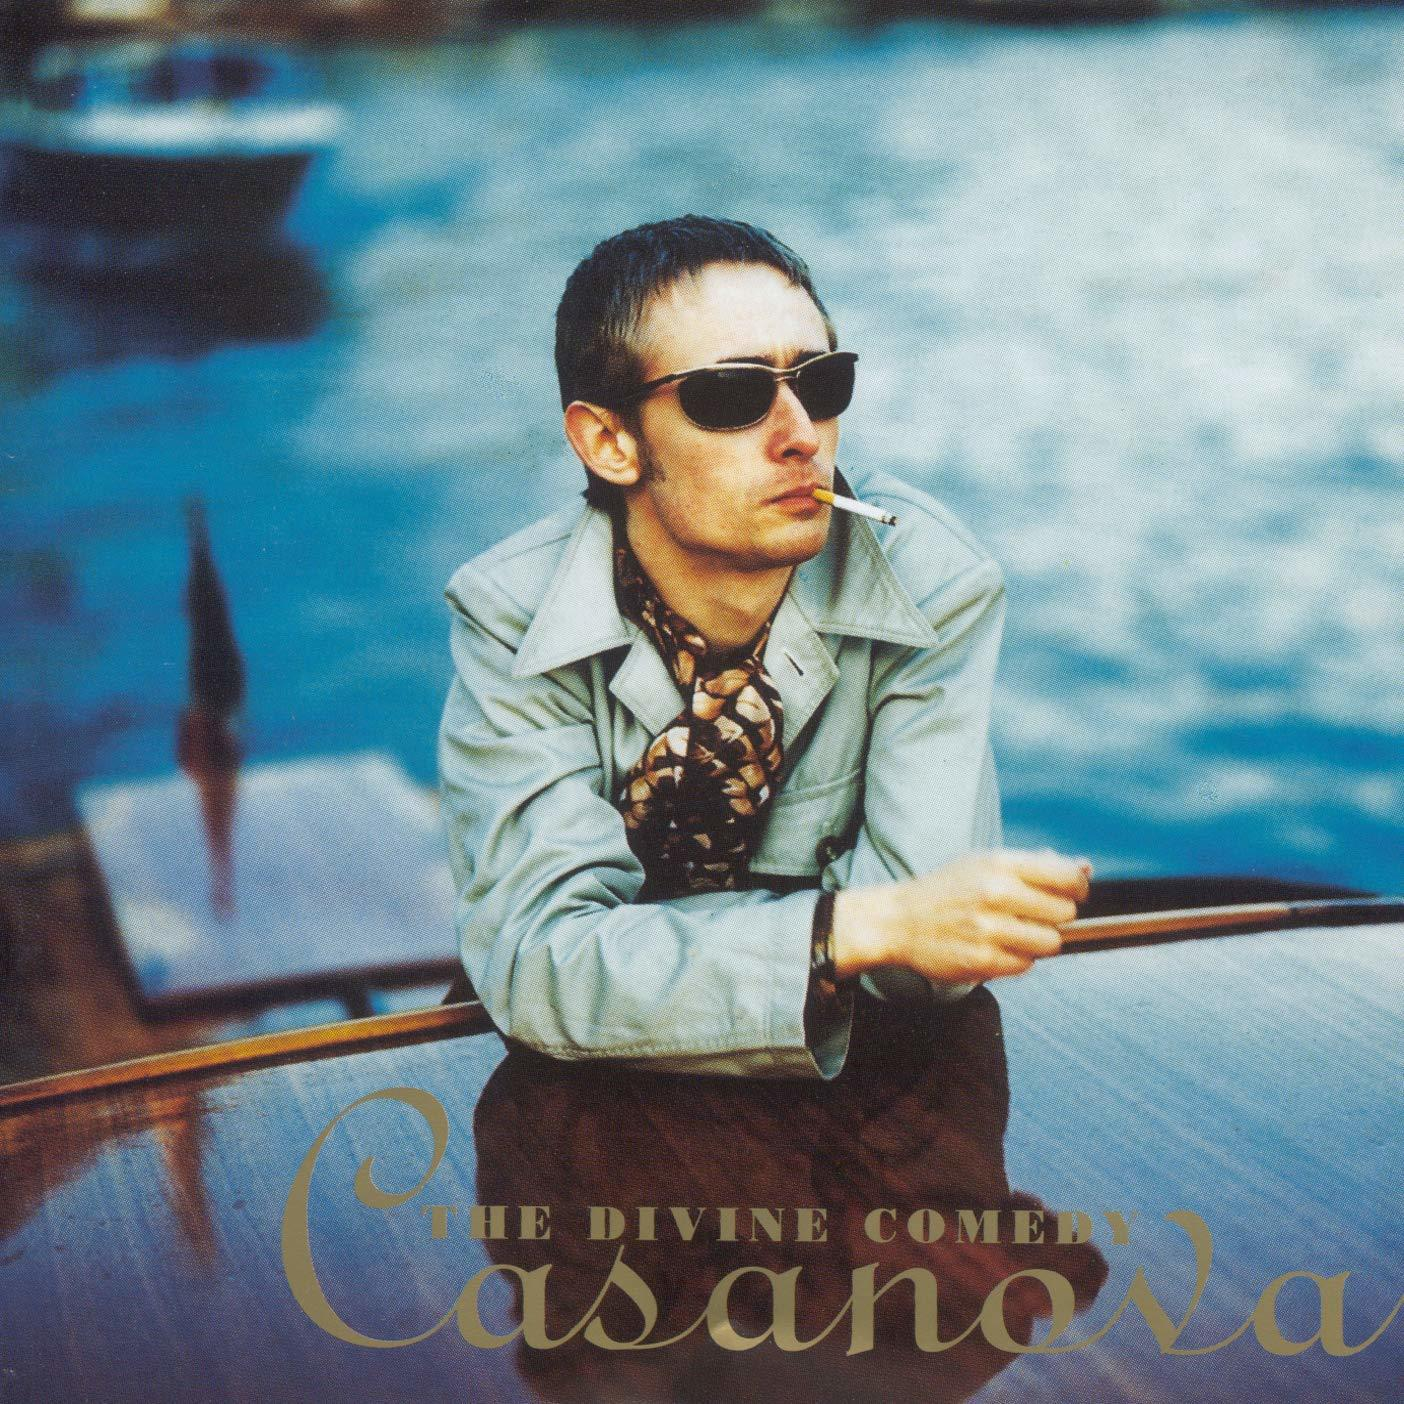 The Divine Comedy (CD) - Casanova 